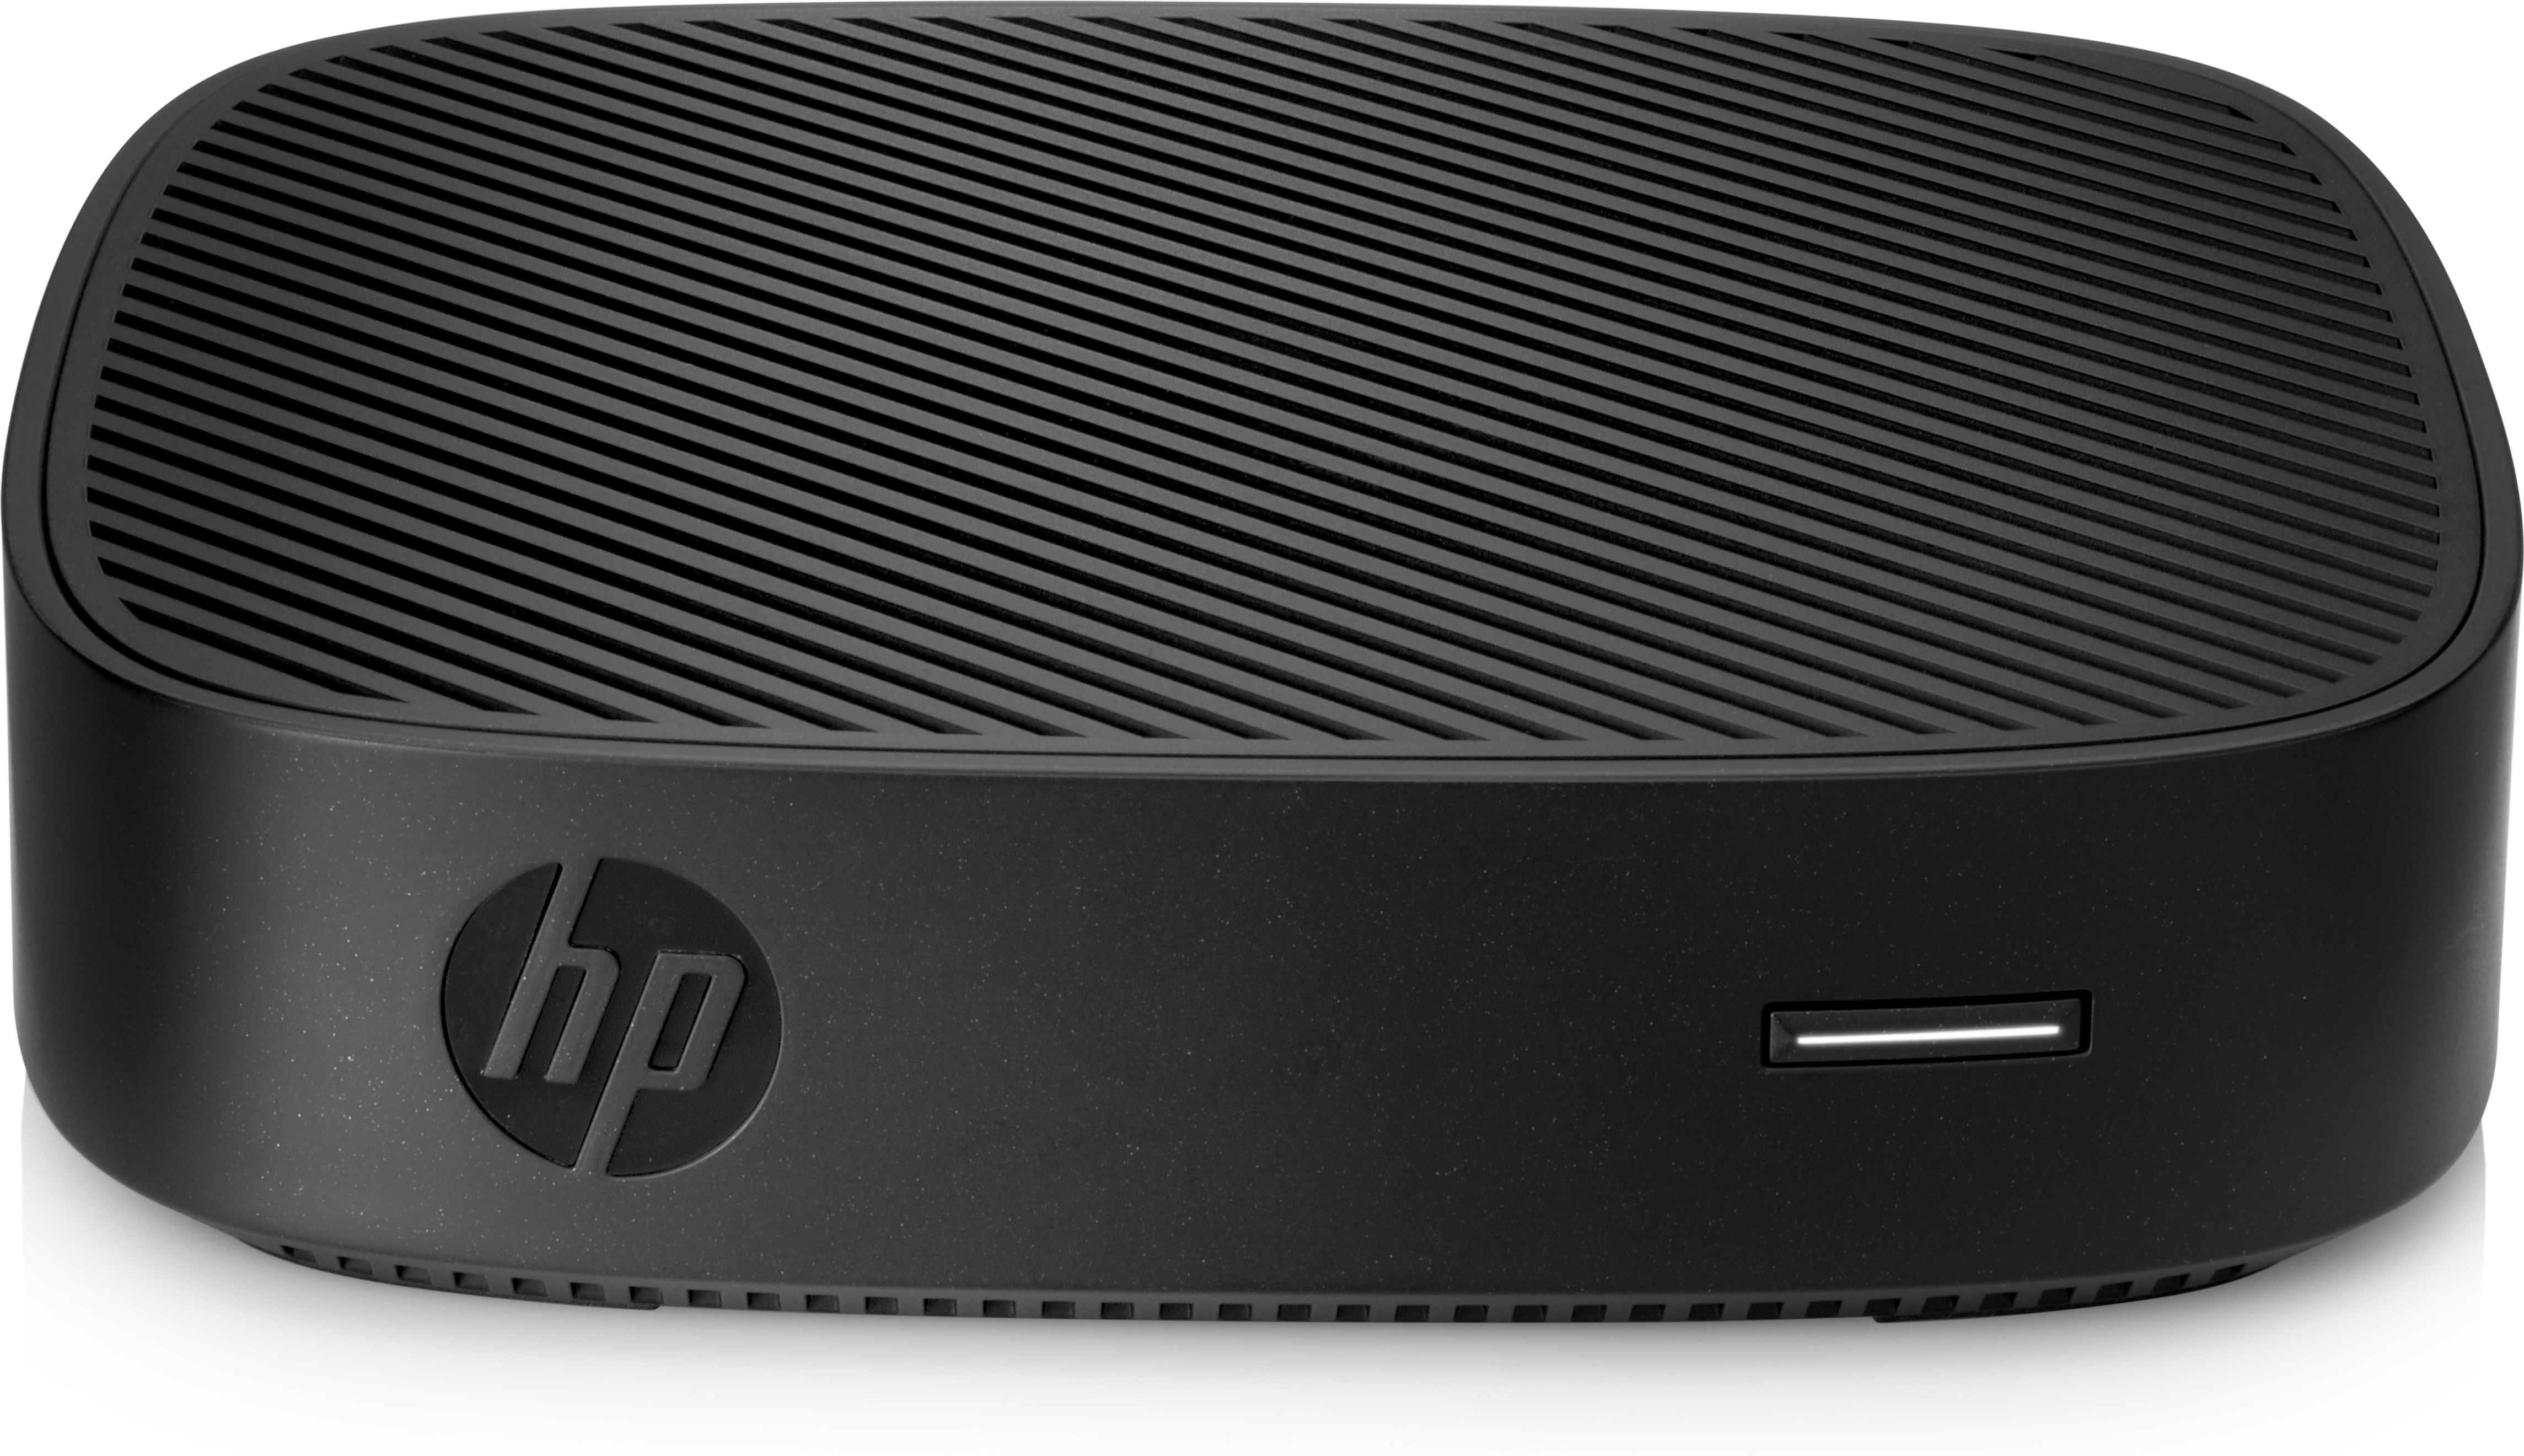 HP t430 - Thin client - DTS - 1 x Celeron N4000 / 1.1 GHz - RAM 2 GB - flash - eMMC 16 GB - UHD Graphics 600 - GigE - HP ThinPro - monitor: none - keyboard: US